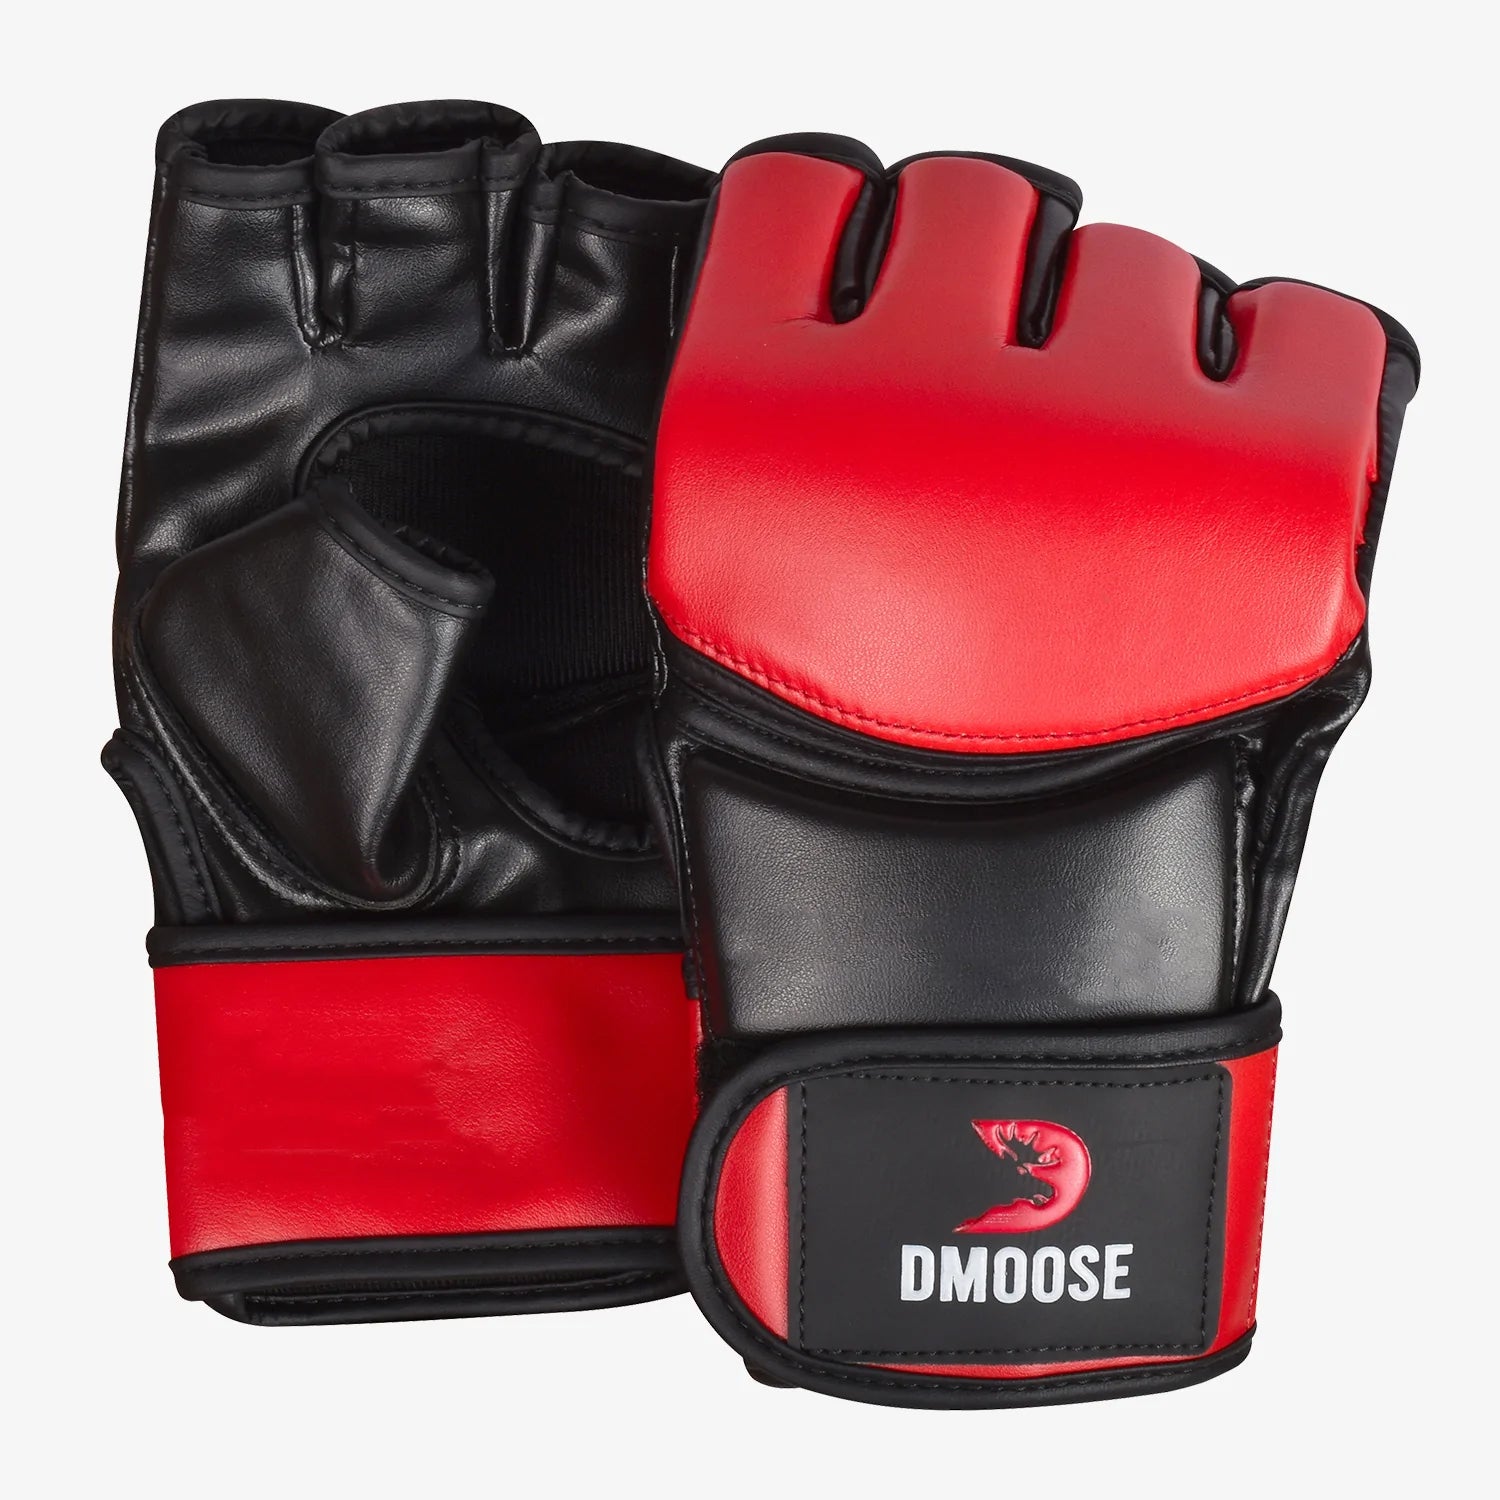 MMA Gloves for Martial Arts & Sparring | DMoose